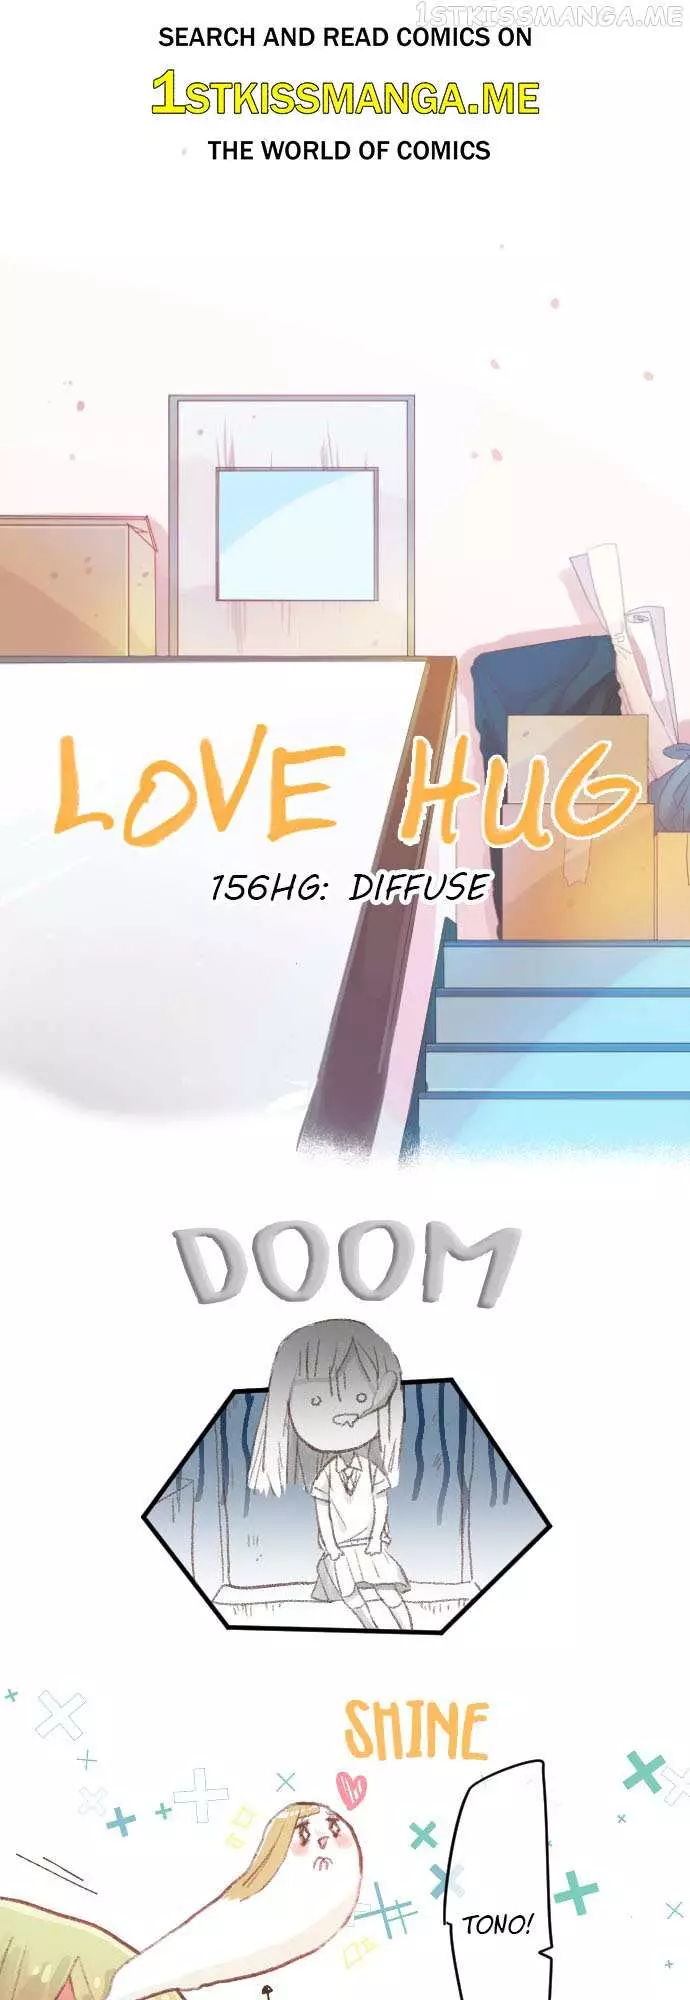 Love Hug - 156 page 1-d23d62cf